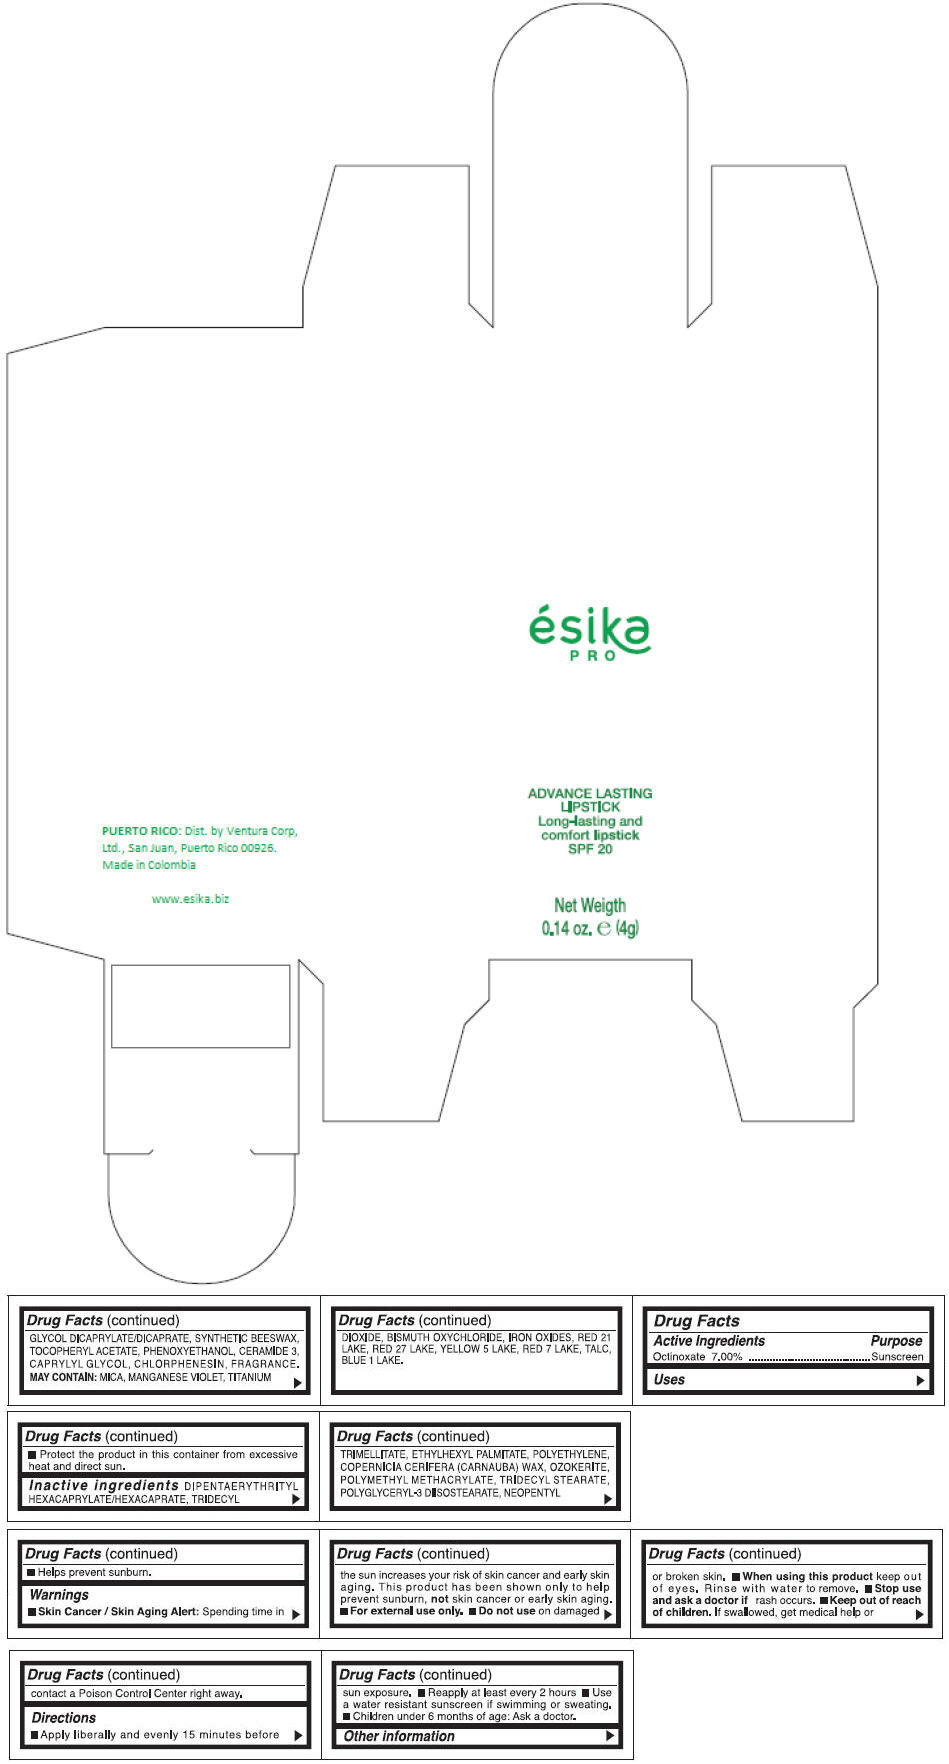 PRINCIPAL DISPLAY PANEL - 4 g Tube Box - (MARRON FANATIC) - RED